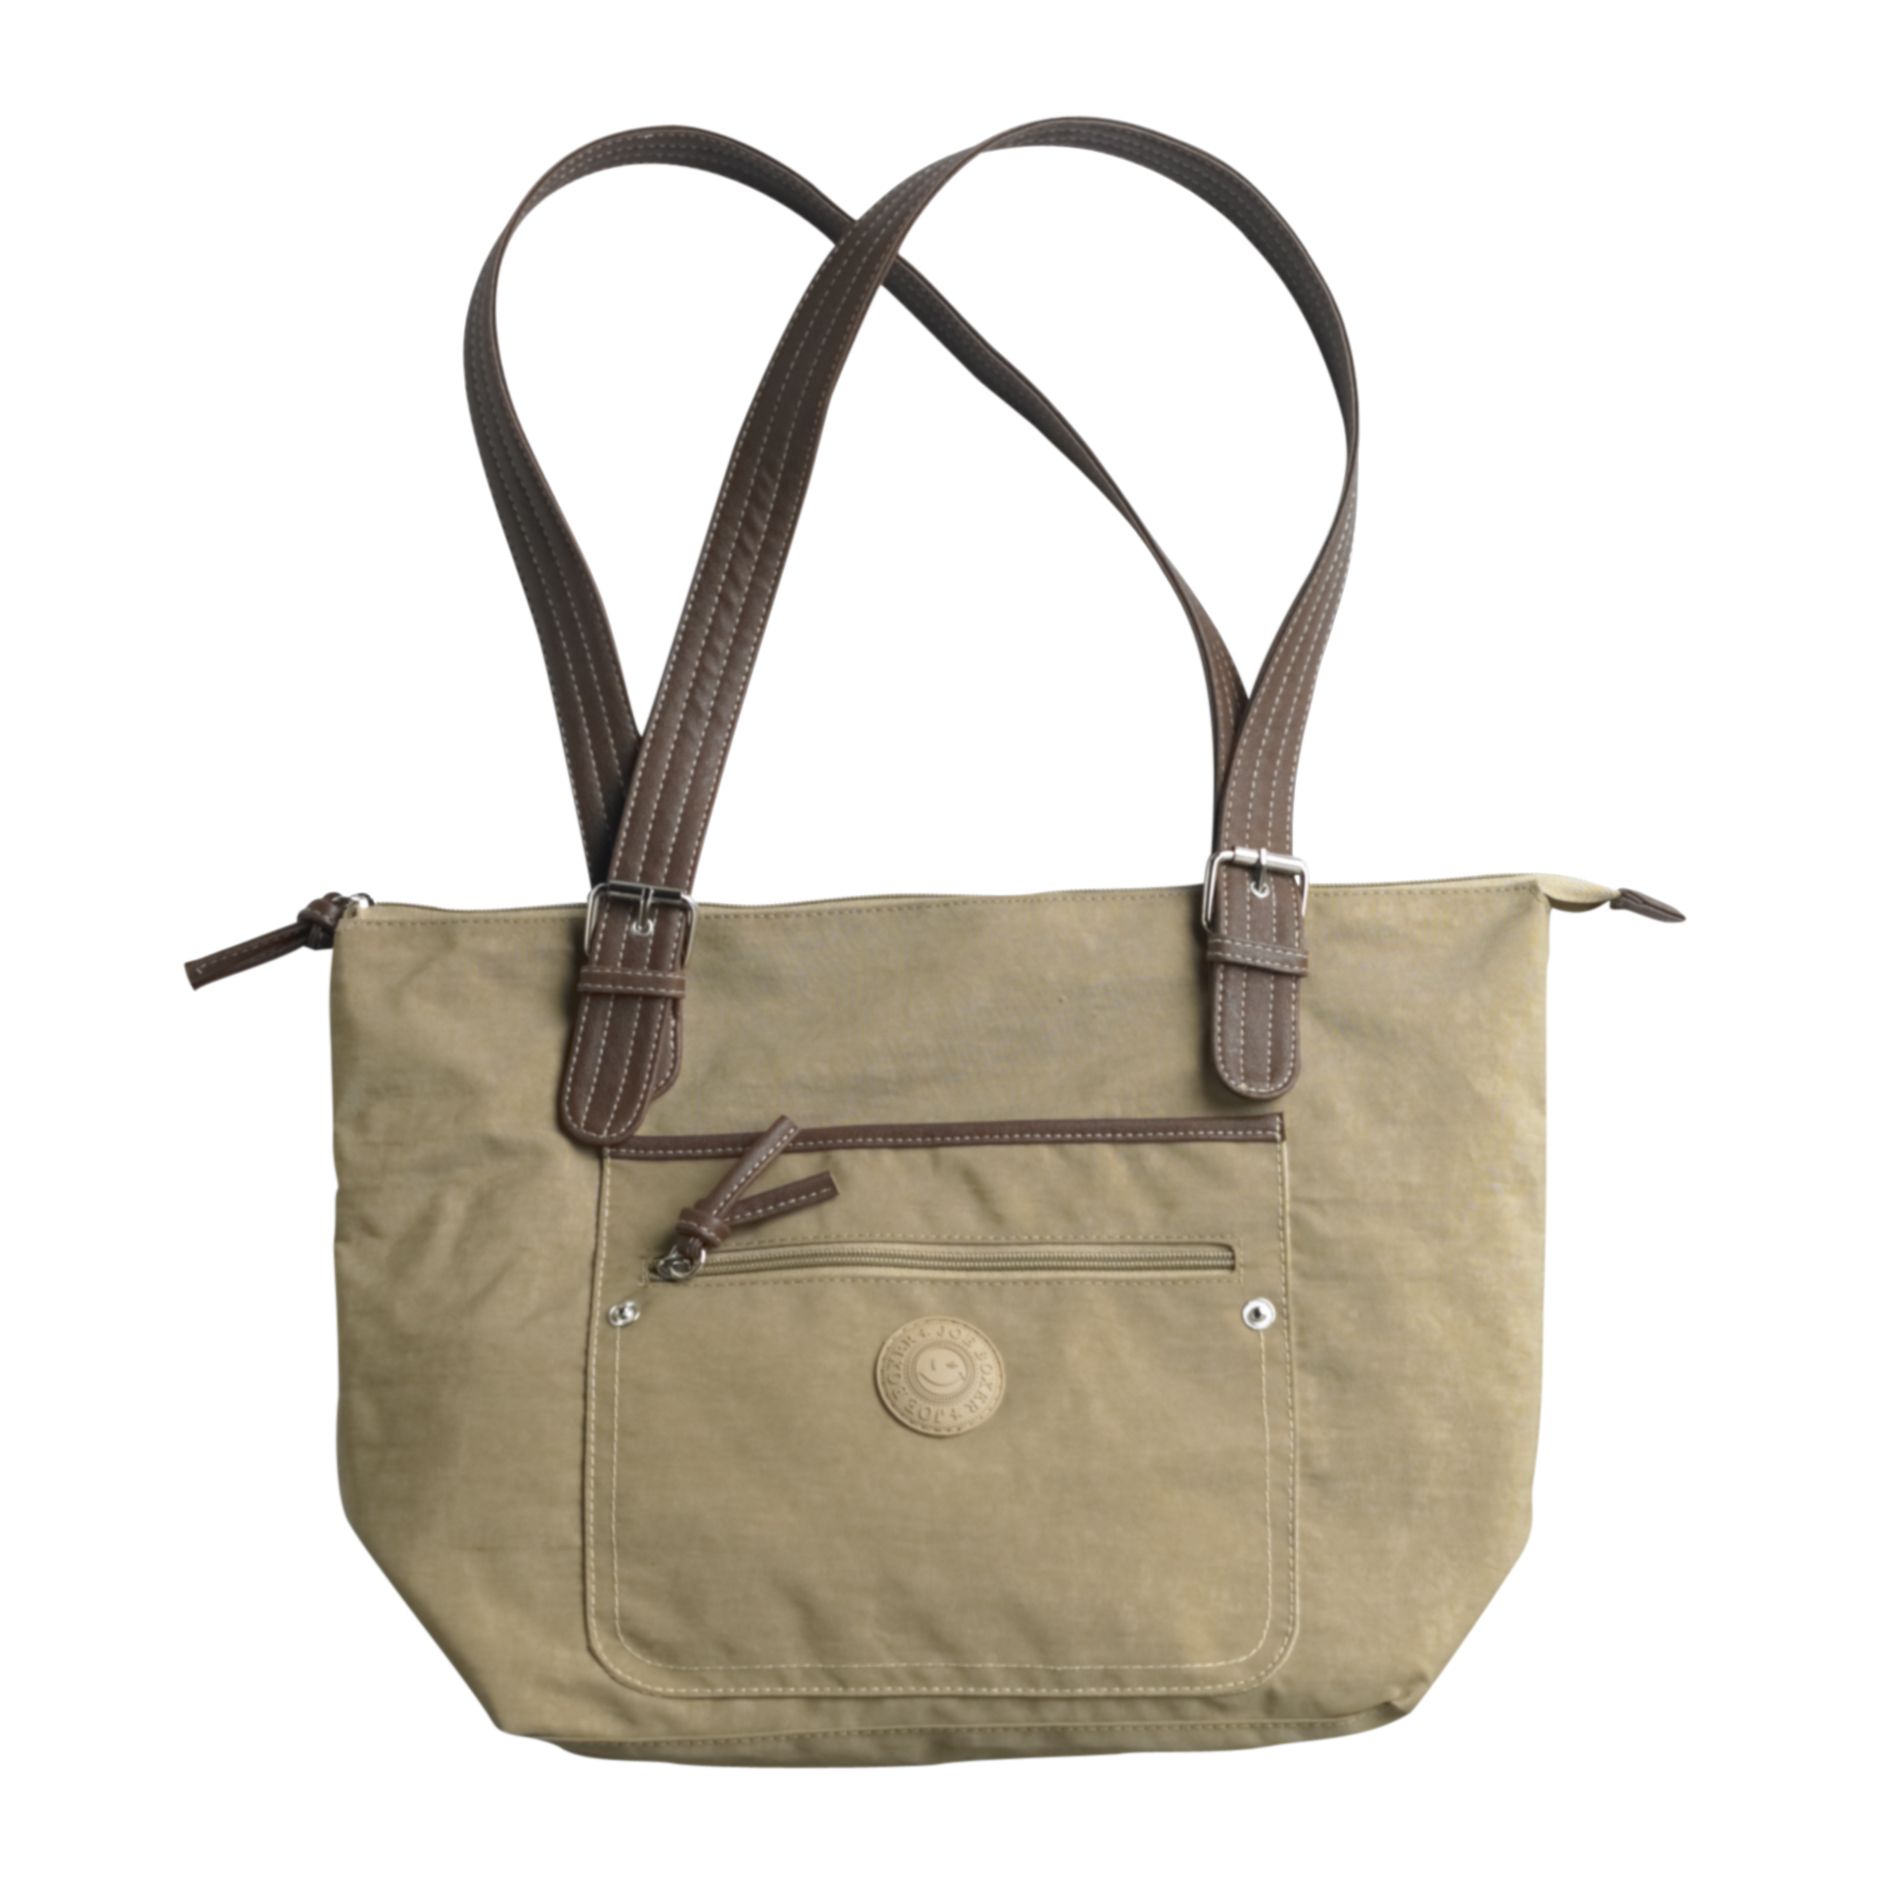 Joe Boxer Women's Nylon Tote Style Handbag